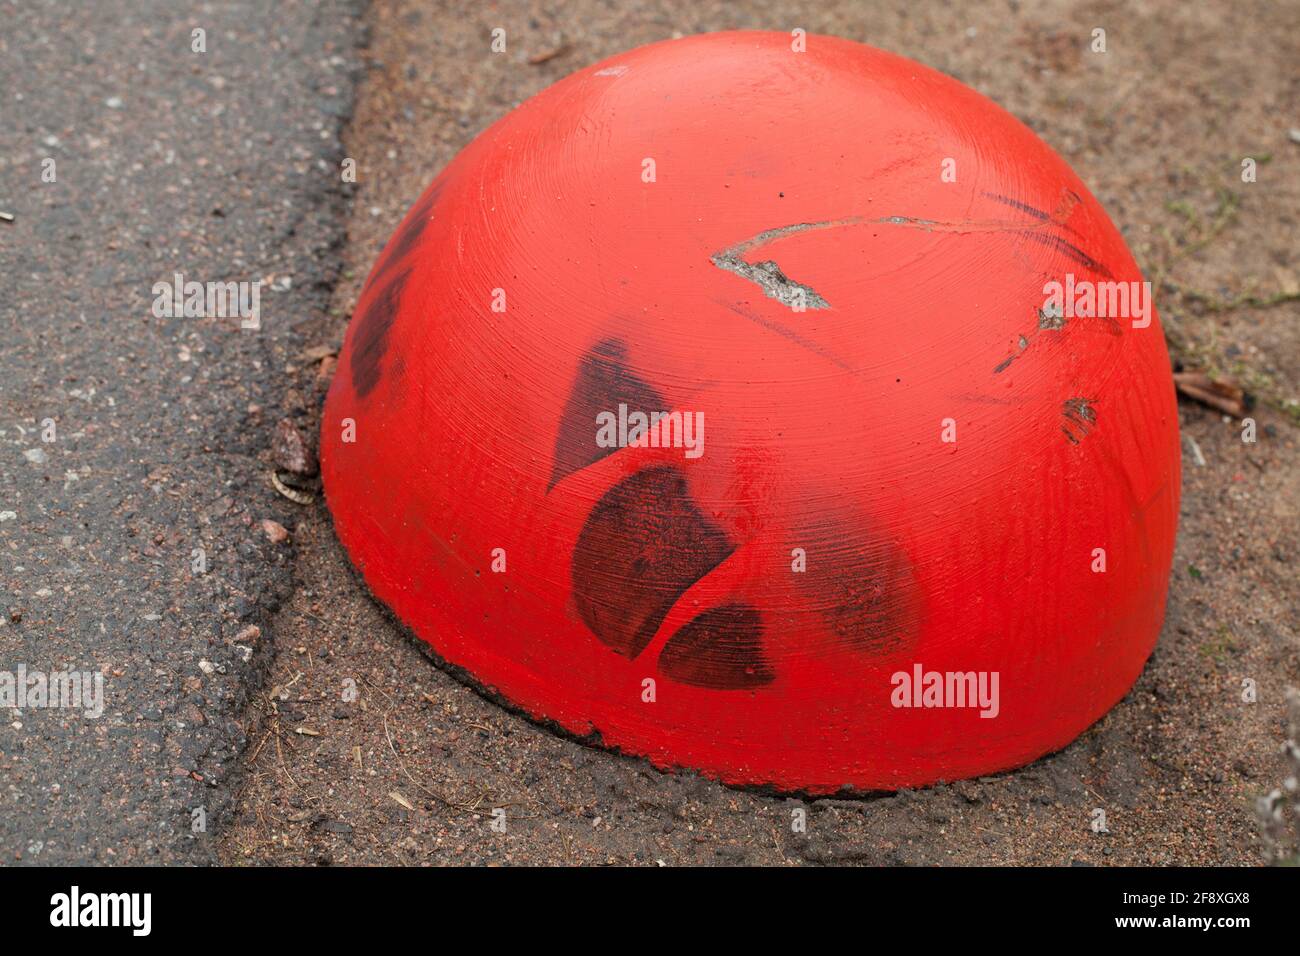 Red concrete anti-parking hemisphere-shaped bollard, close up photo Stock Photo